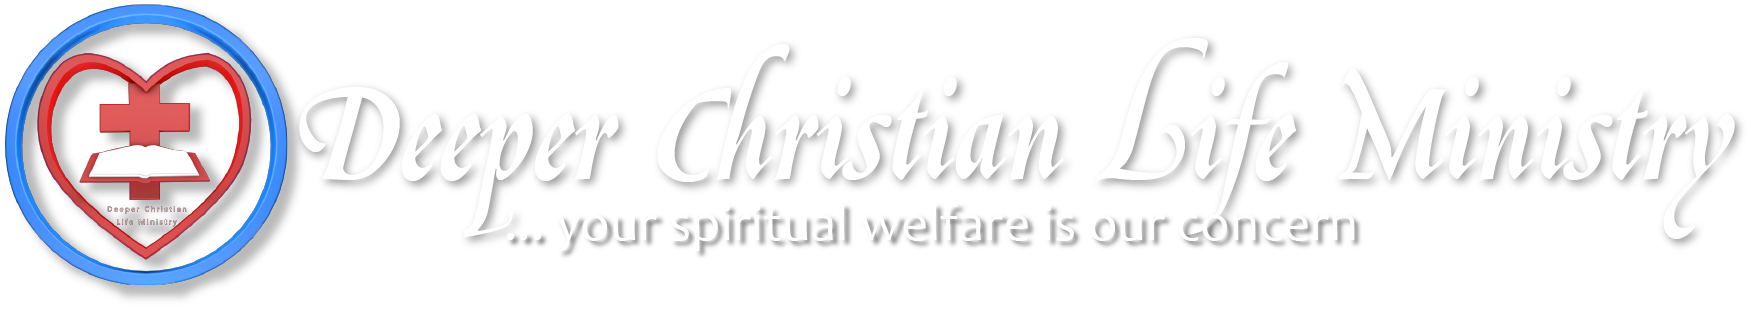 Deeper Christian Life Ministry Fiji Islands